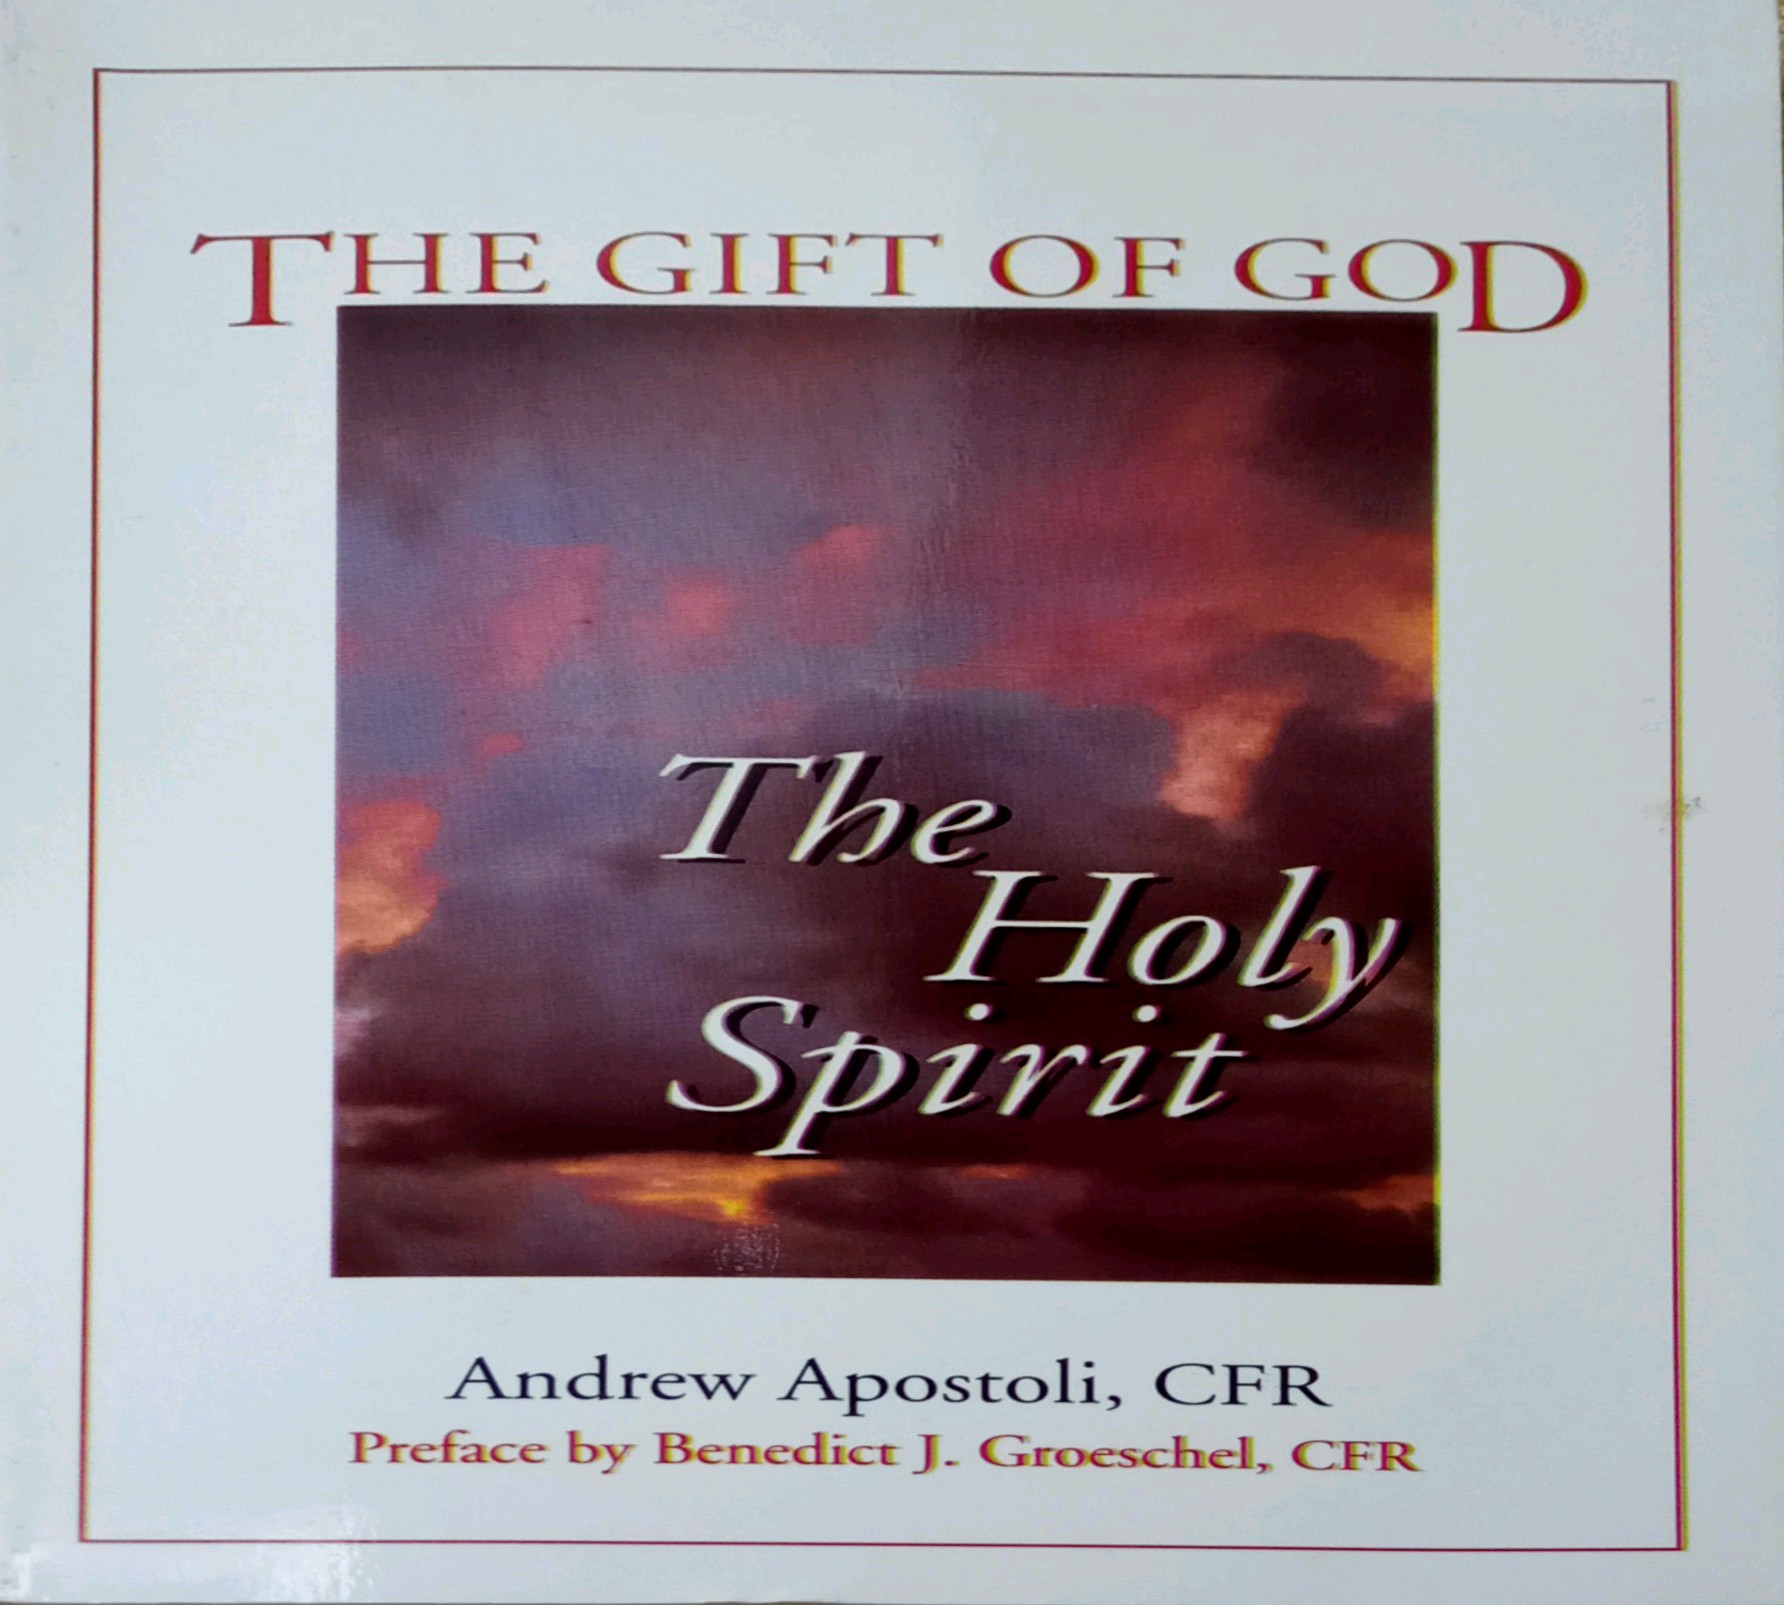 THE GIFT OF GOD: THE HOLY SPIRIT